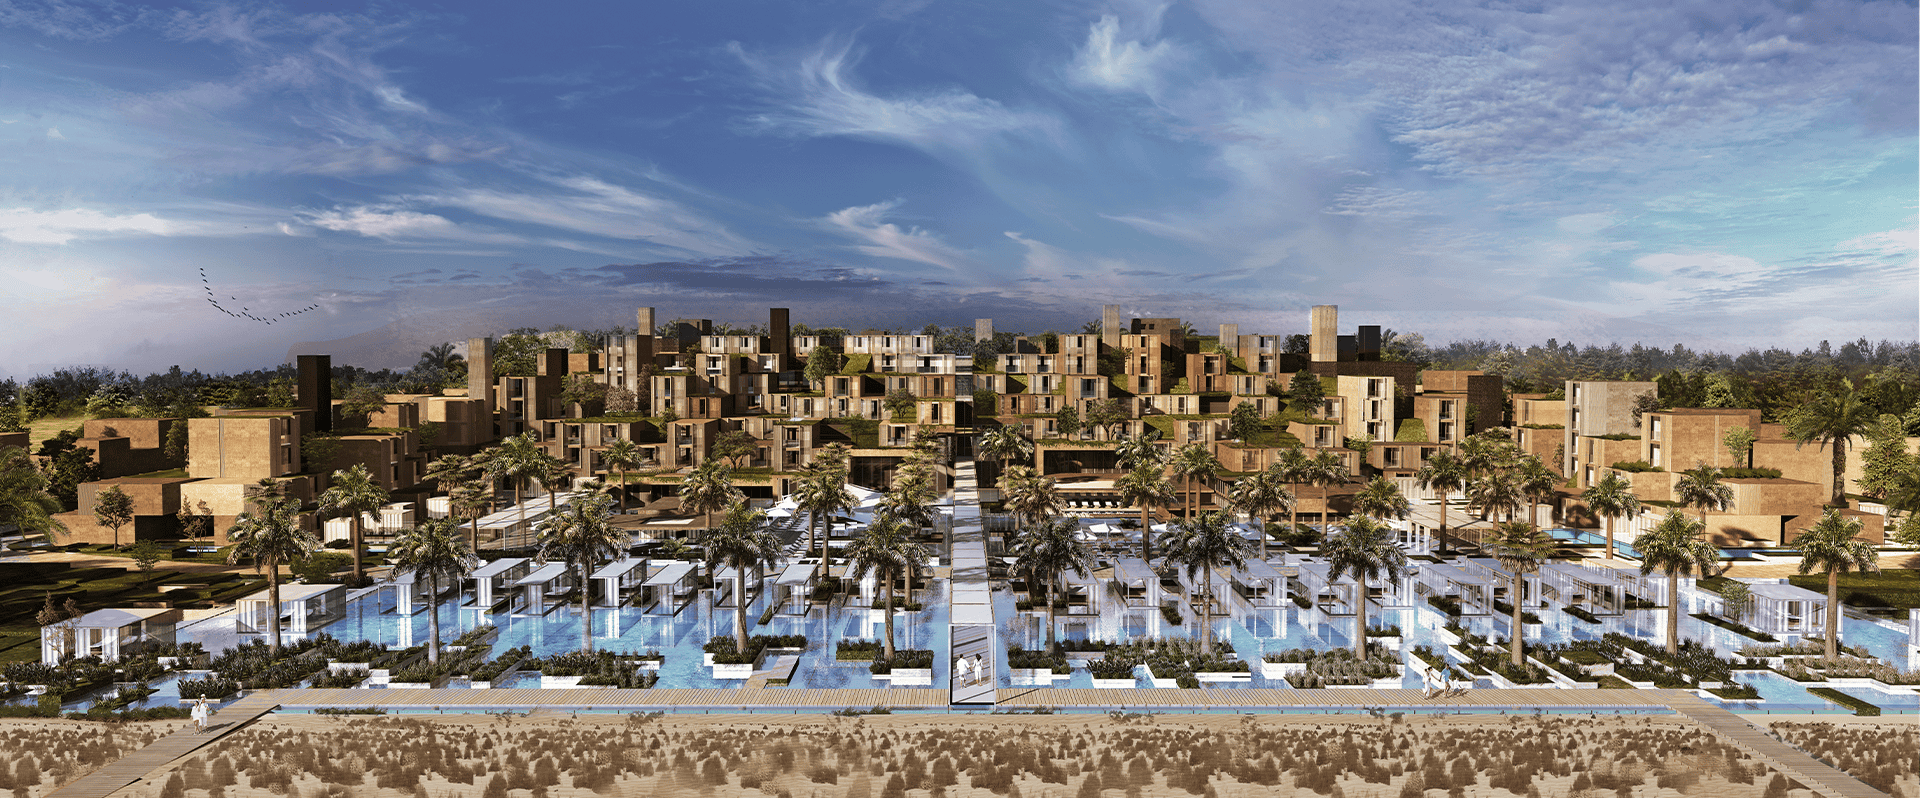 EAA – EMRE AROLAT ARCHITECTURE | RIXOS ABU DHABI RESORT HOTEL